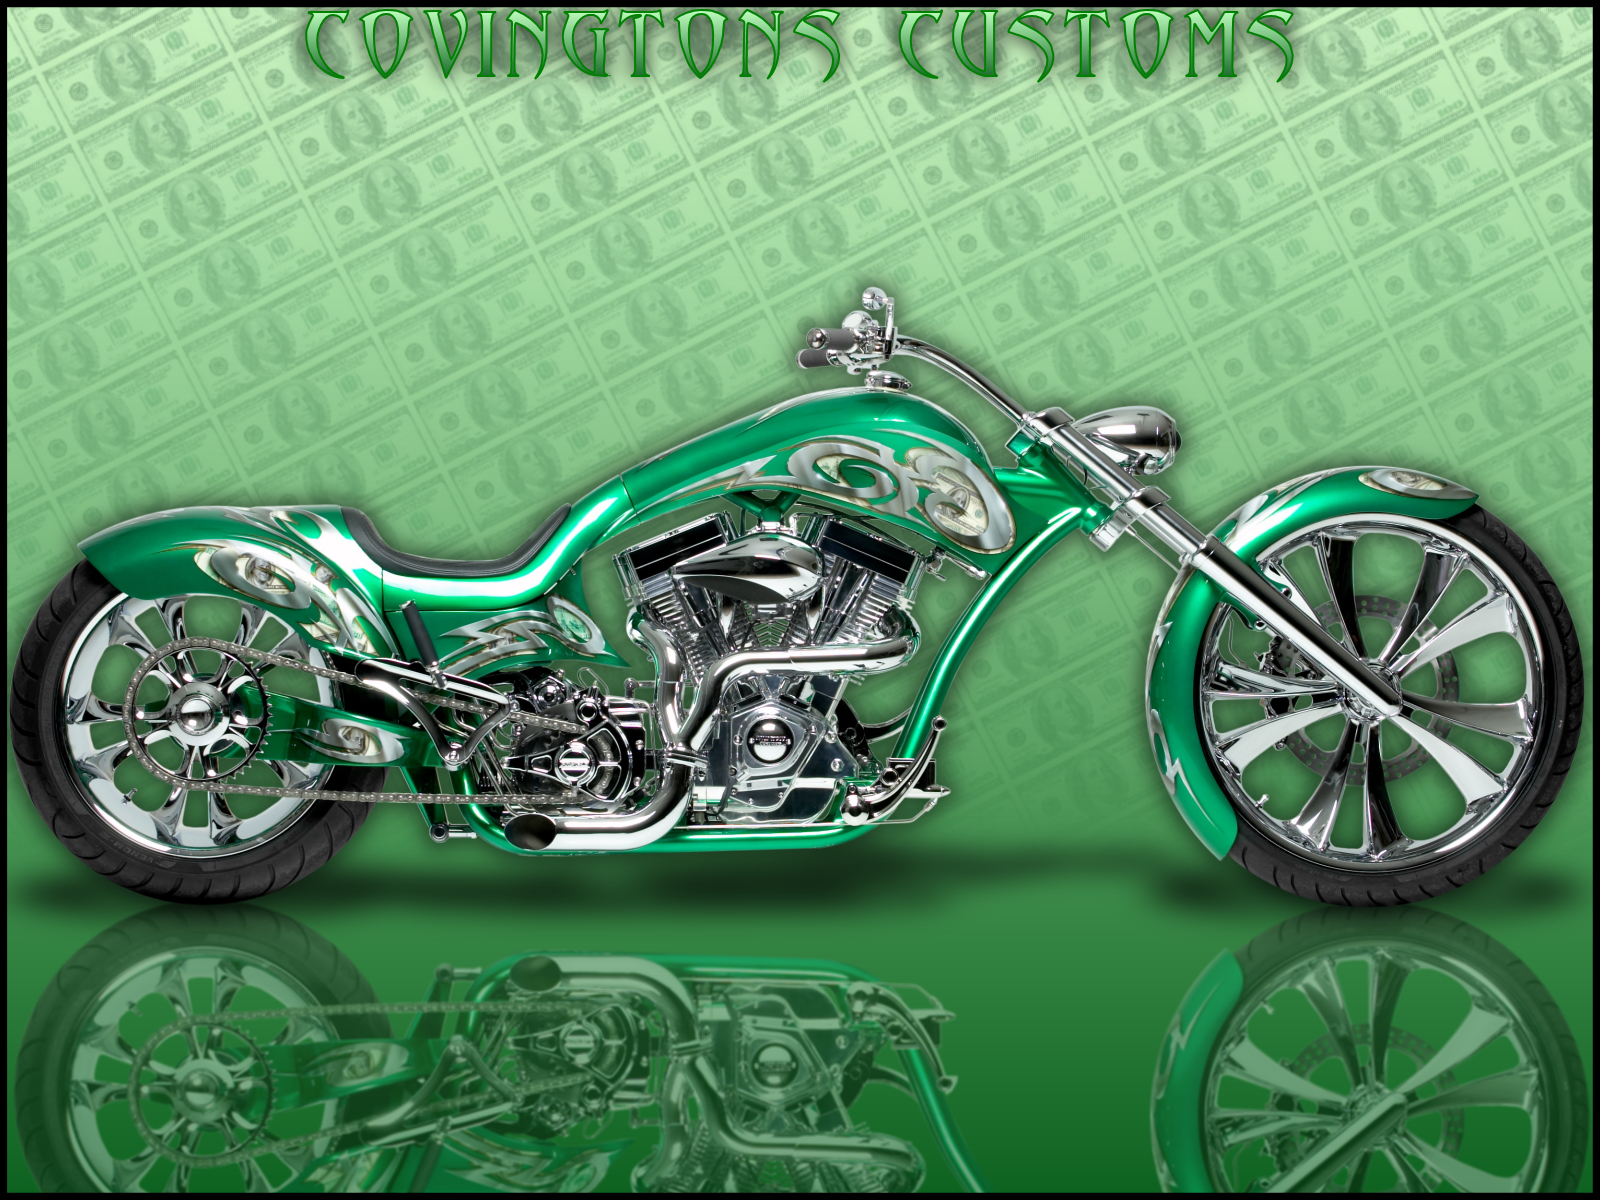 Covingtons Custom Motorcycle Wallpaper 29jpg